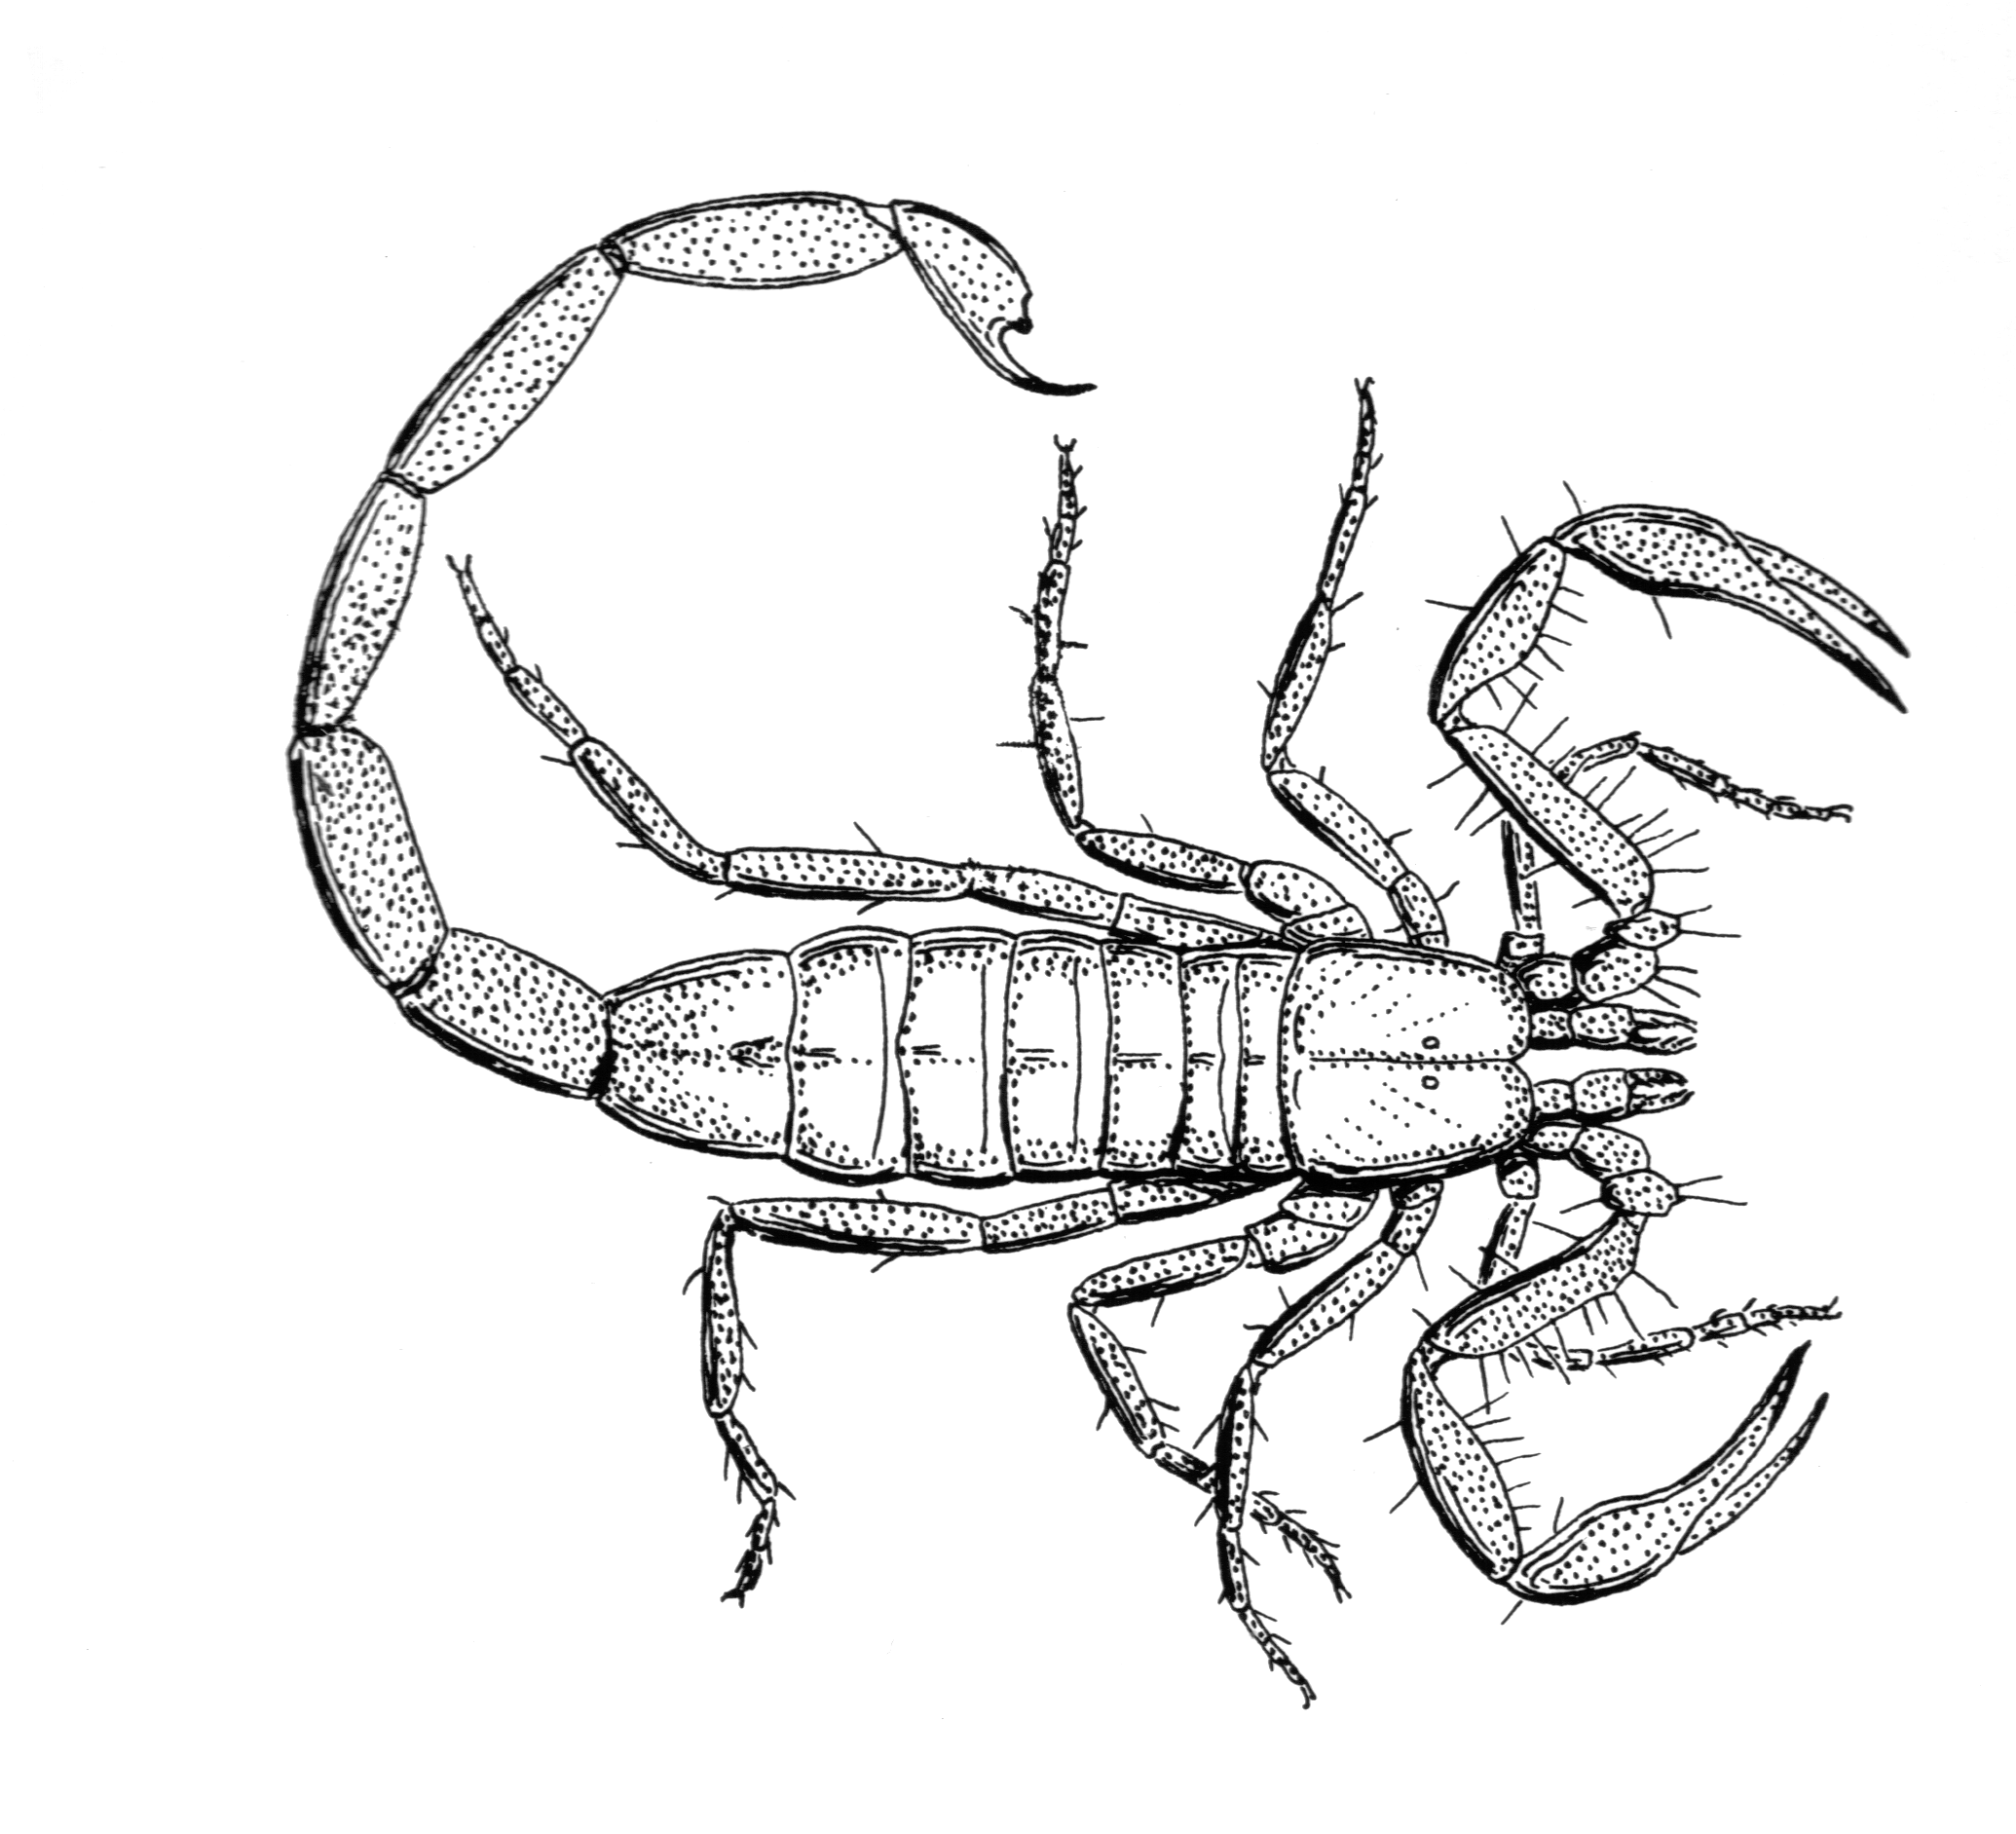 Free Scorpion Drawing, Download Free Scorpion Drawing png images, Free